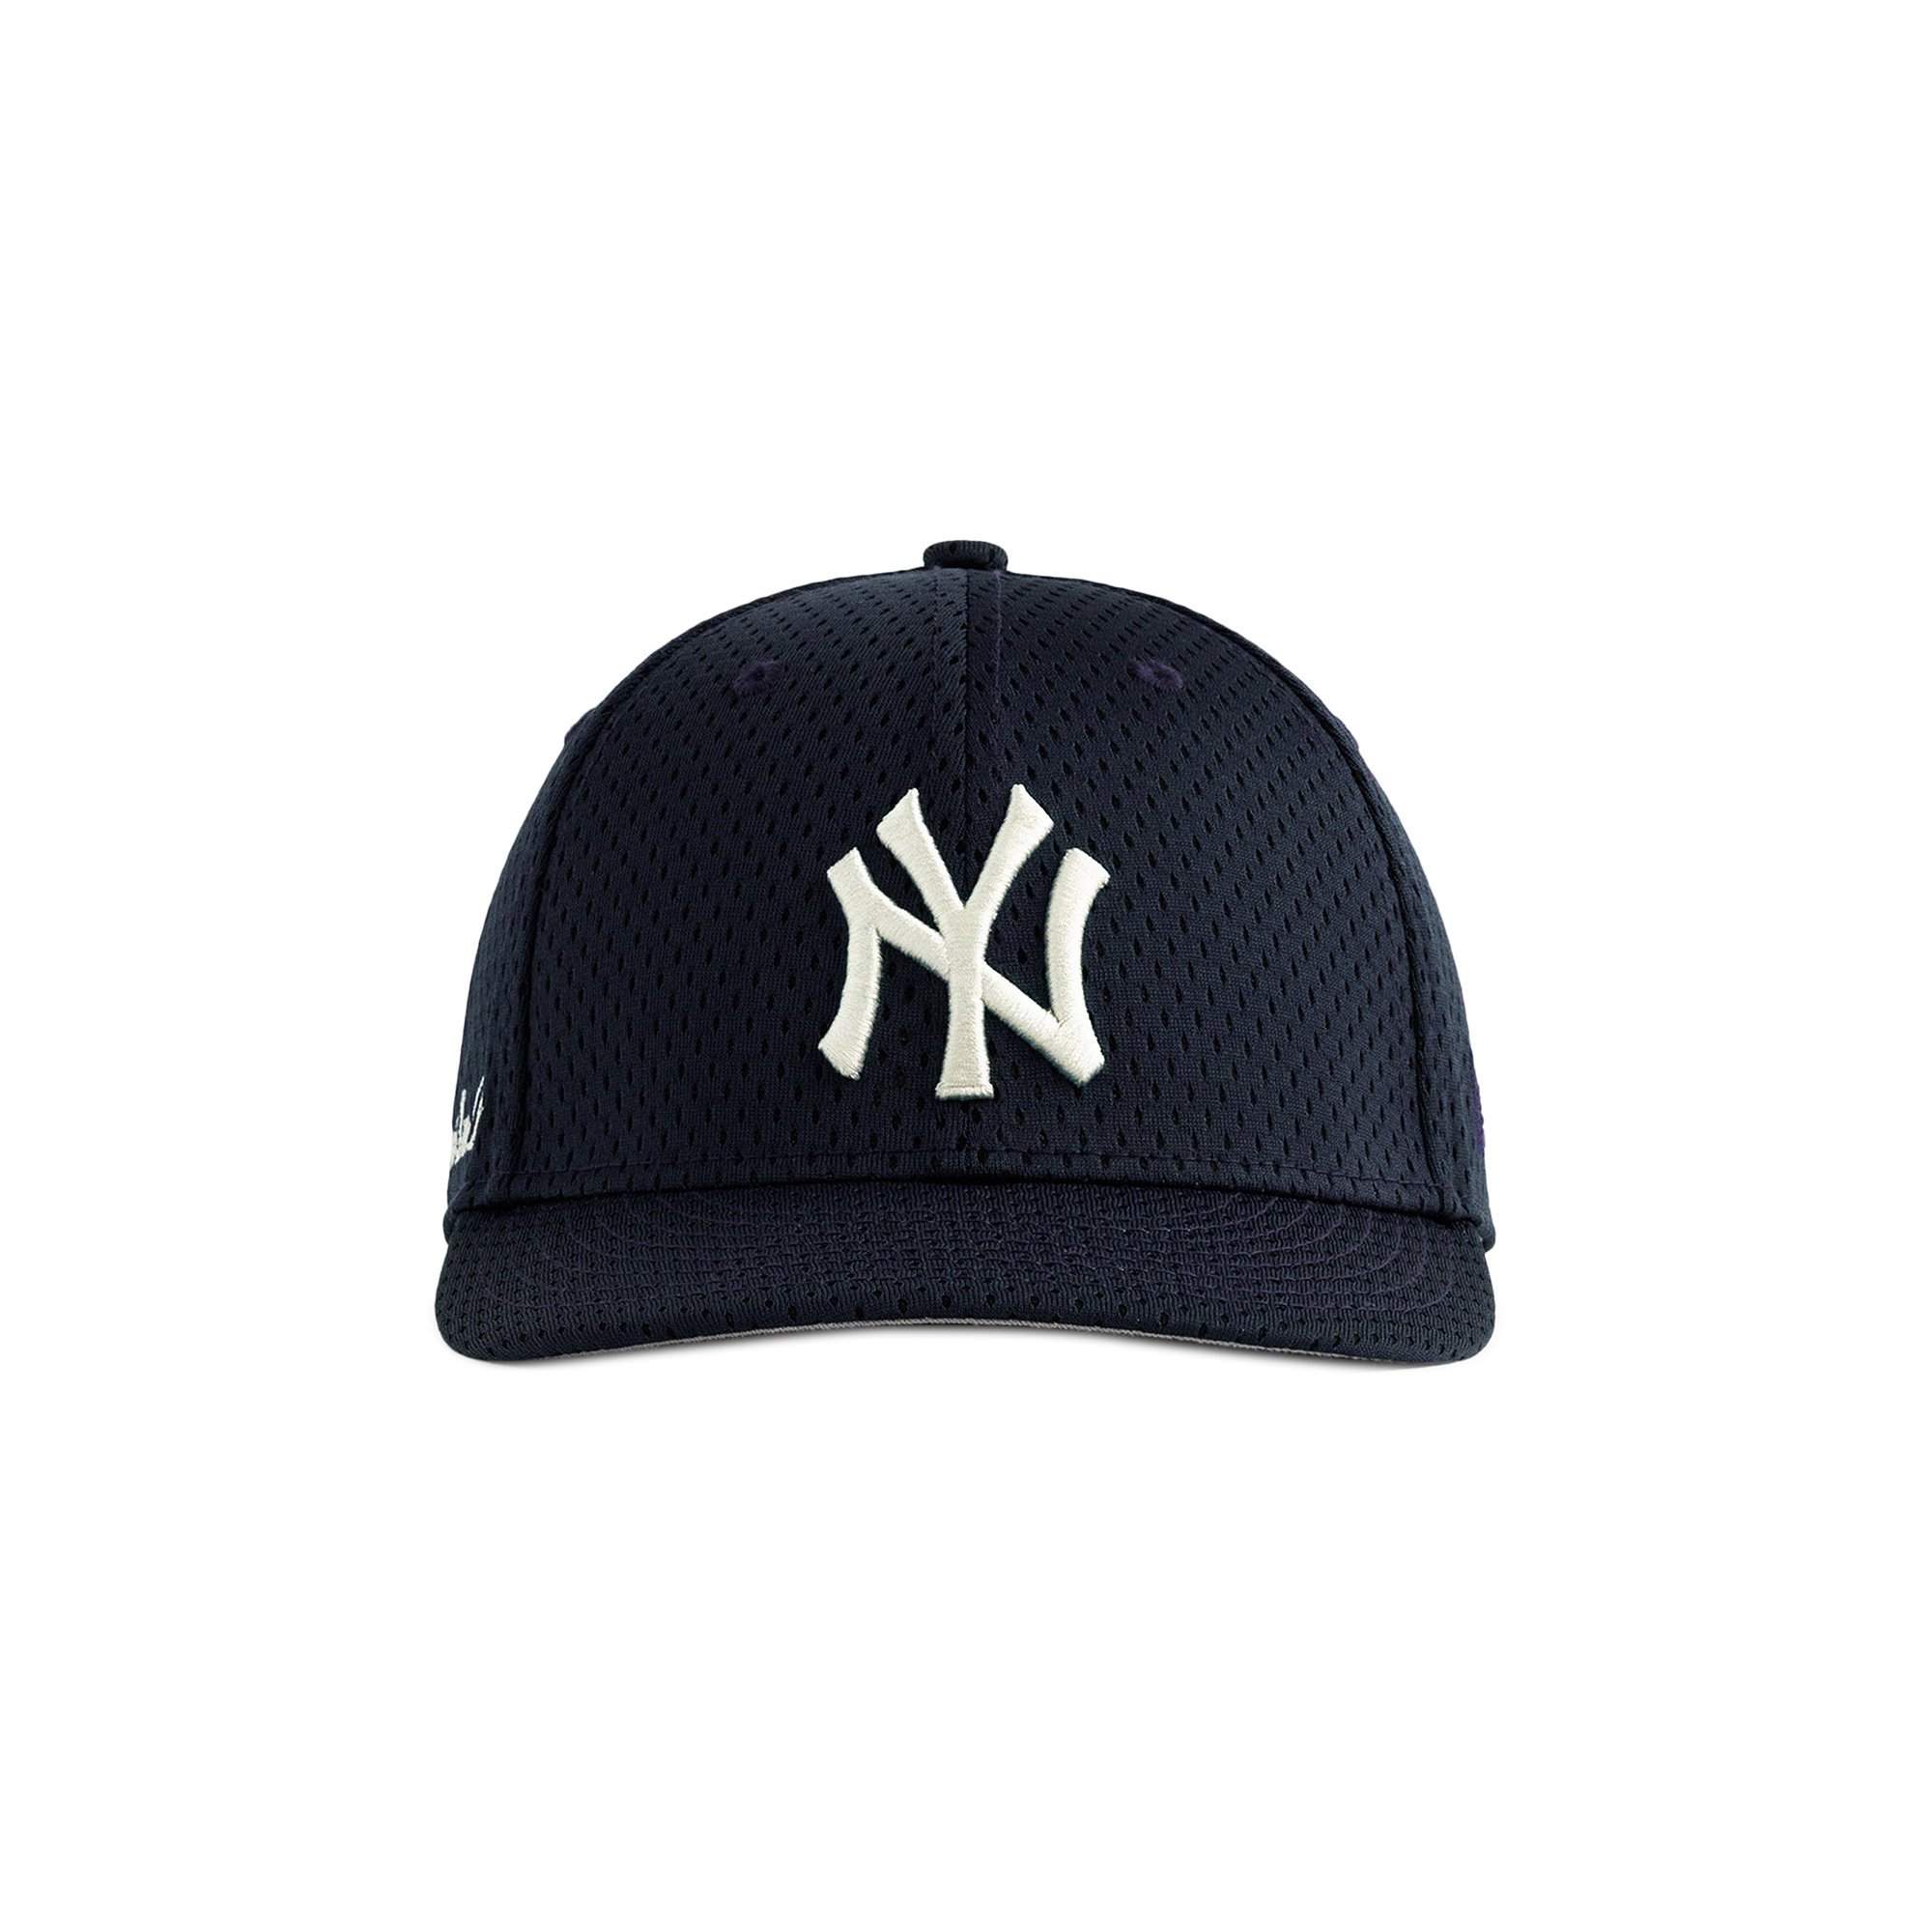 Aimé Leon Dore x New Era Yankees Mesh Hat 'Yankees Navy'